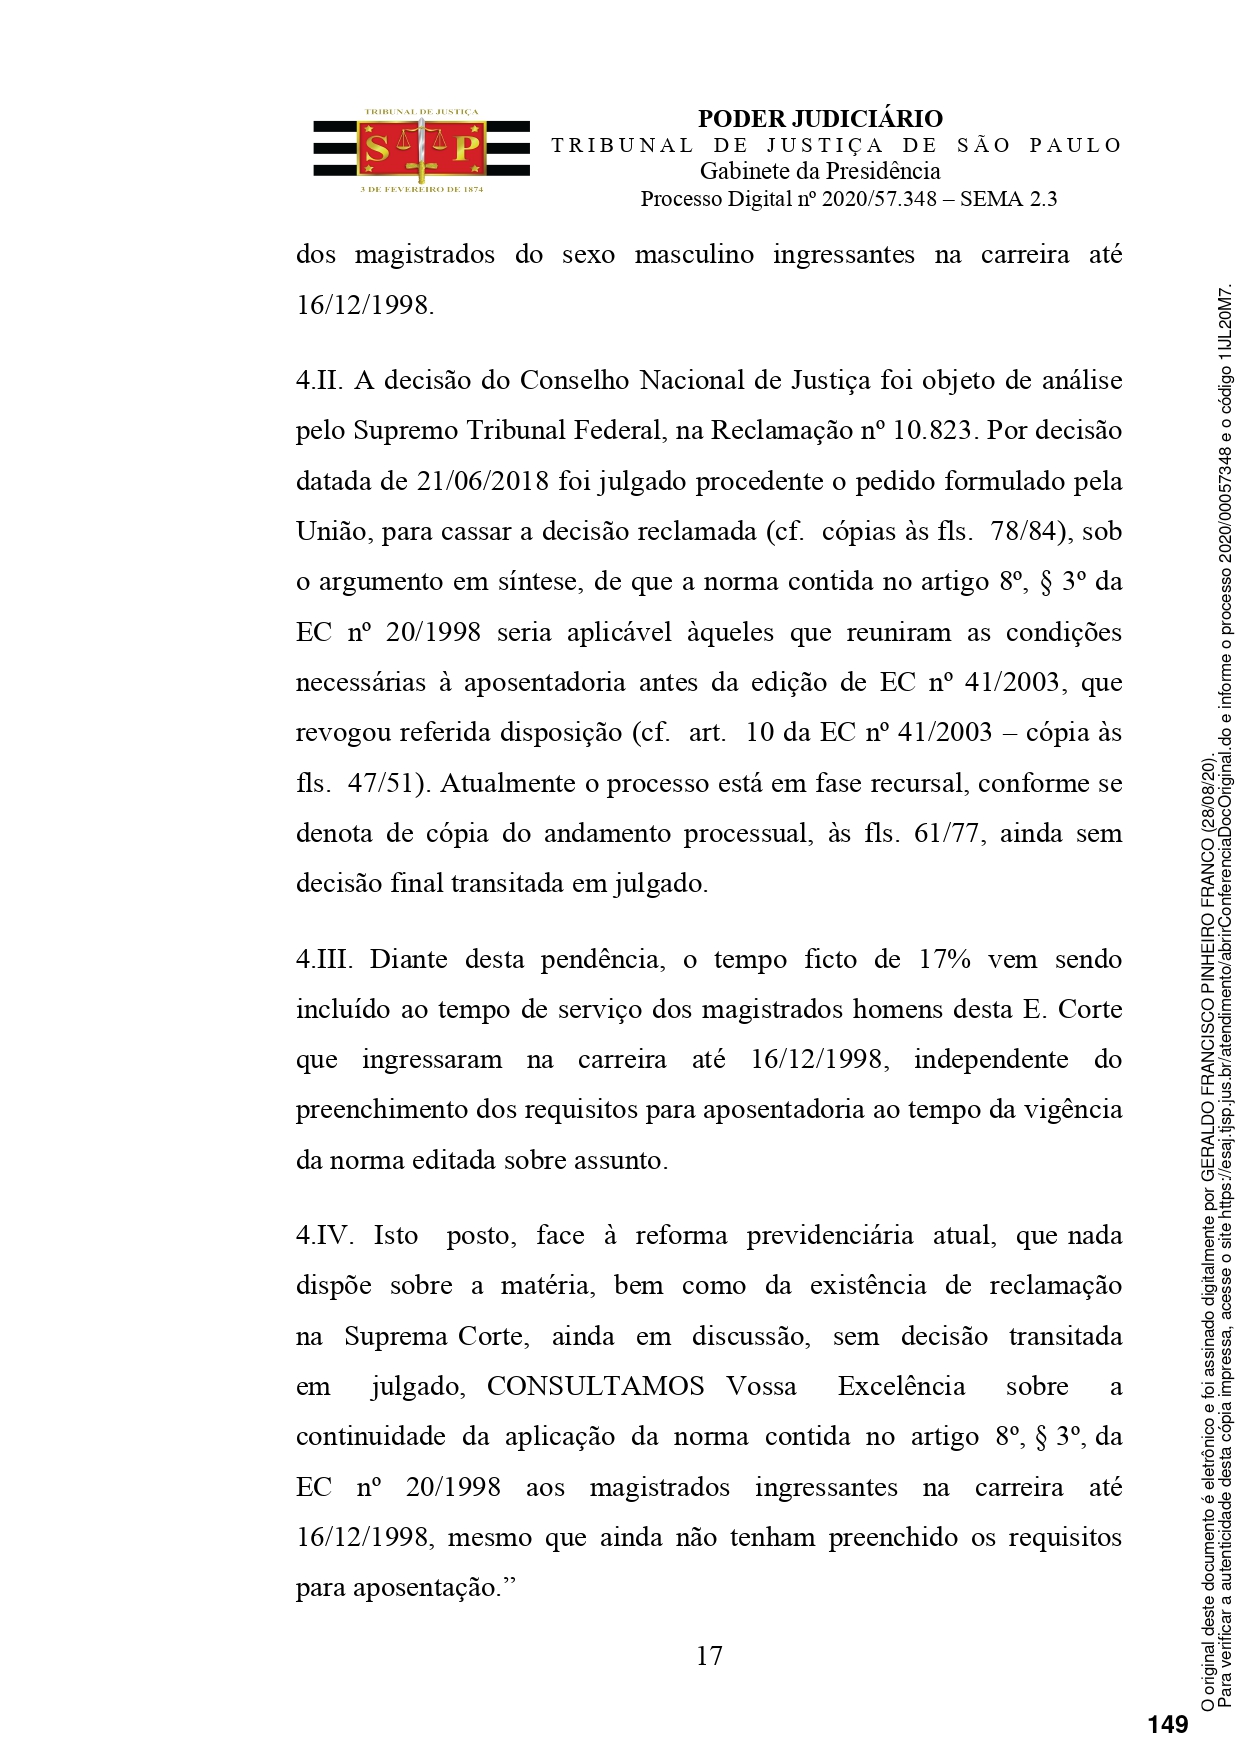 reforma-previdencia-tj-sp_page-0017.jpg